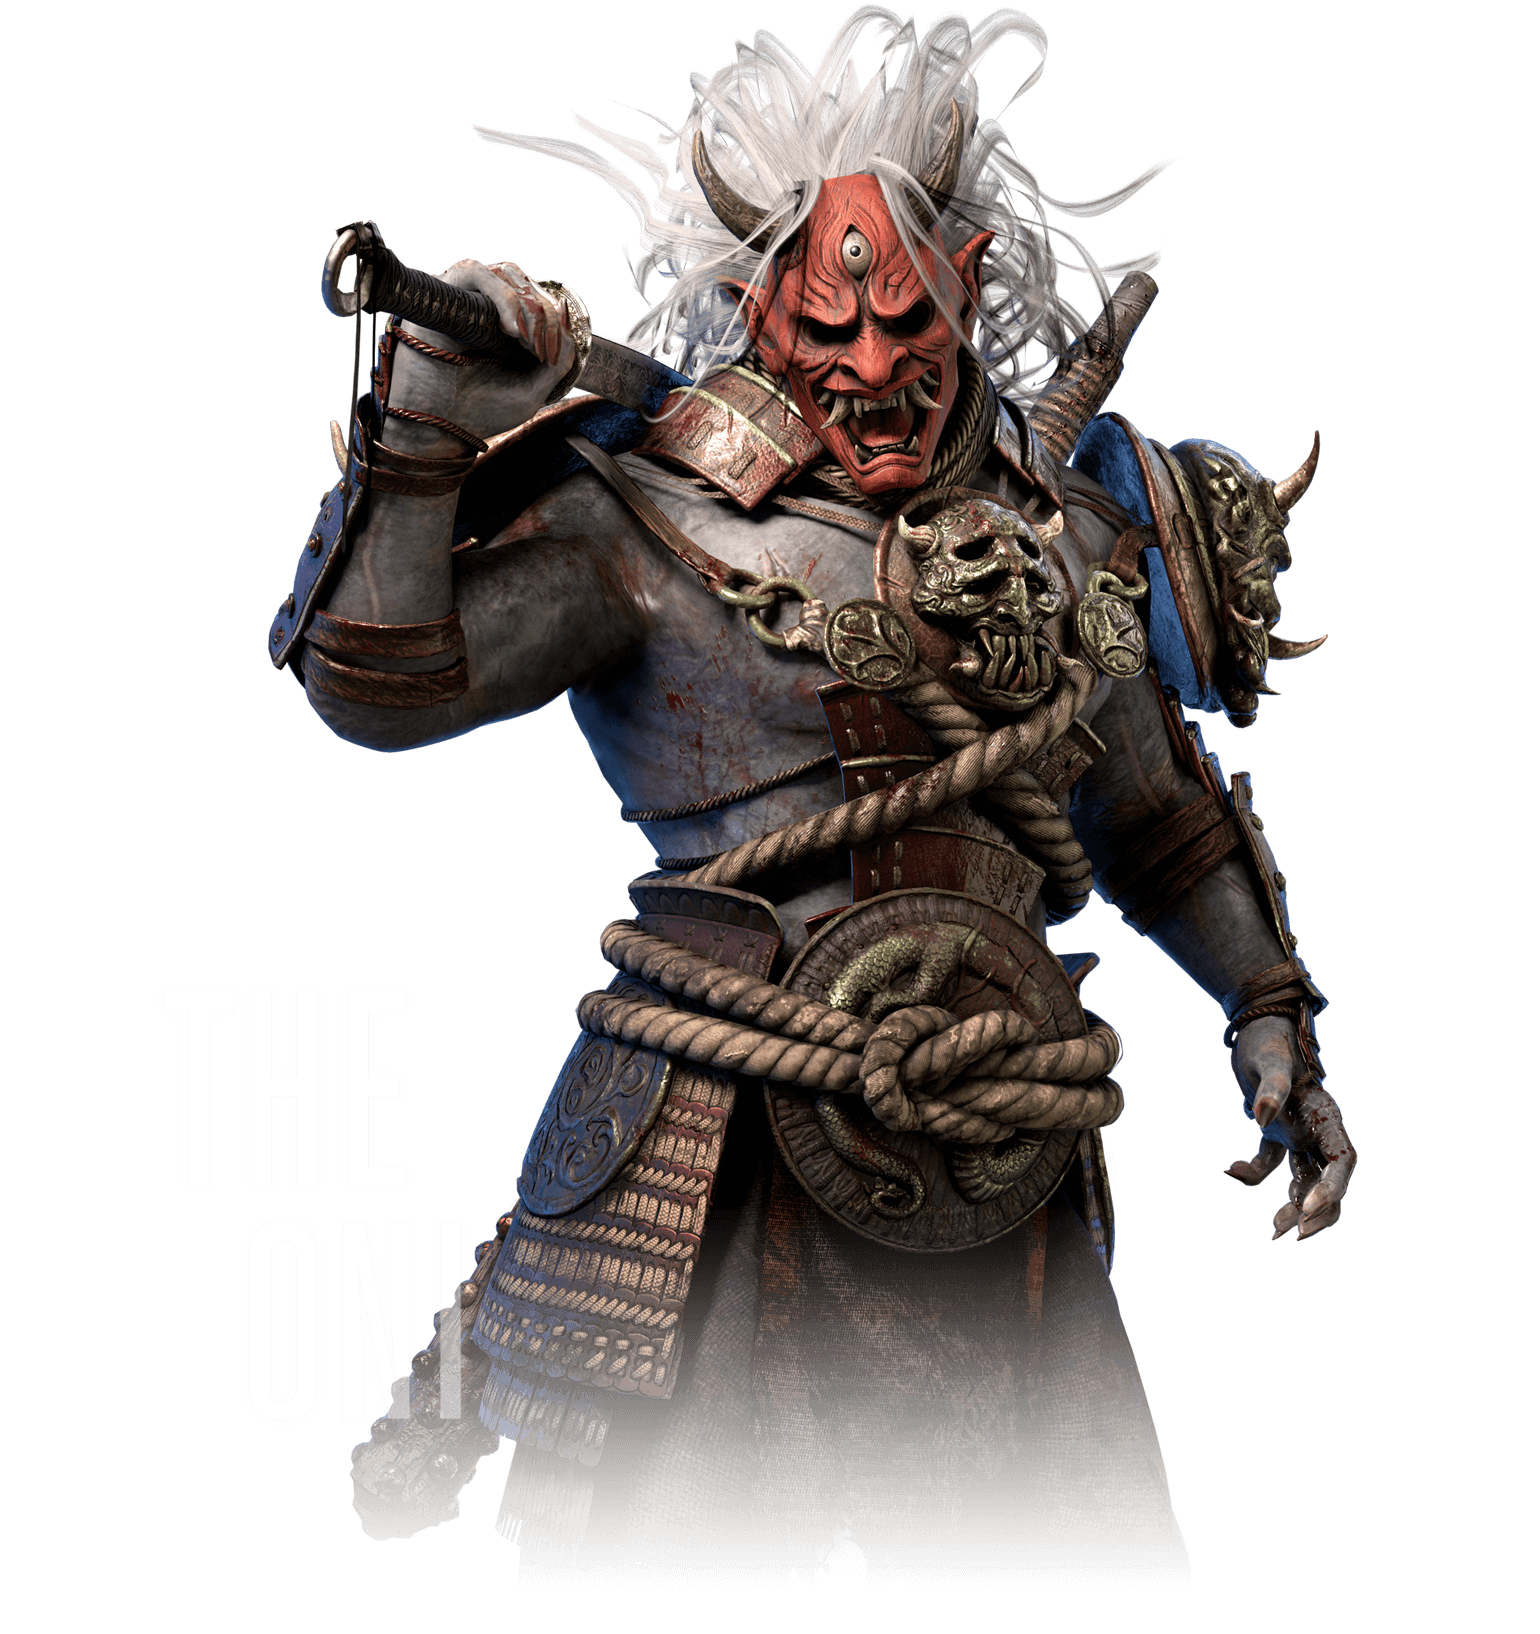 The Oni Dead By Daylight 攻略 Wiki Atwiki アットウィキ